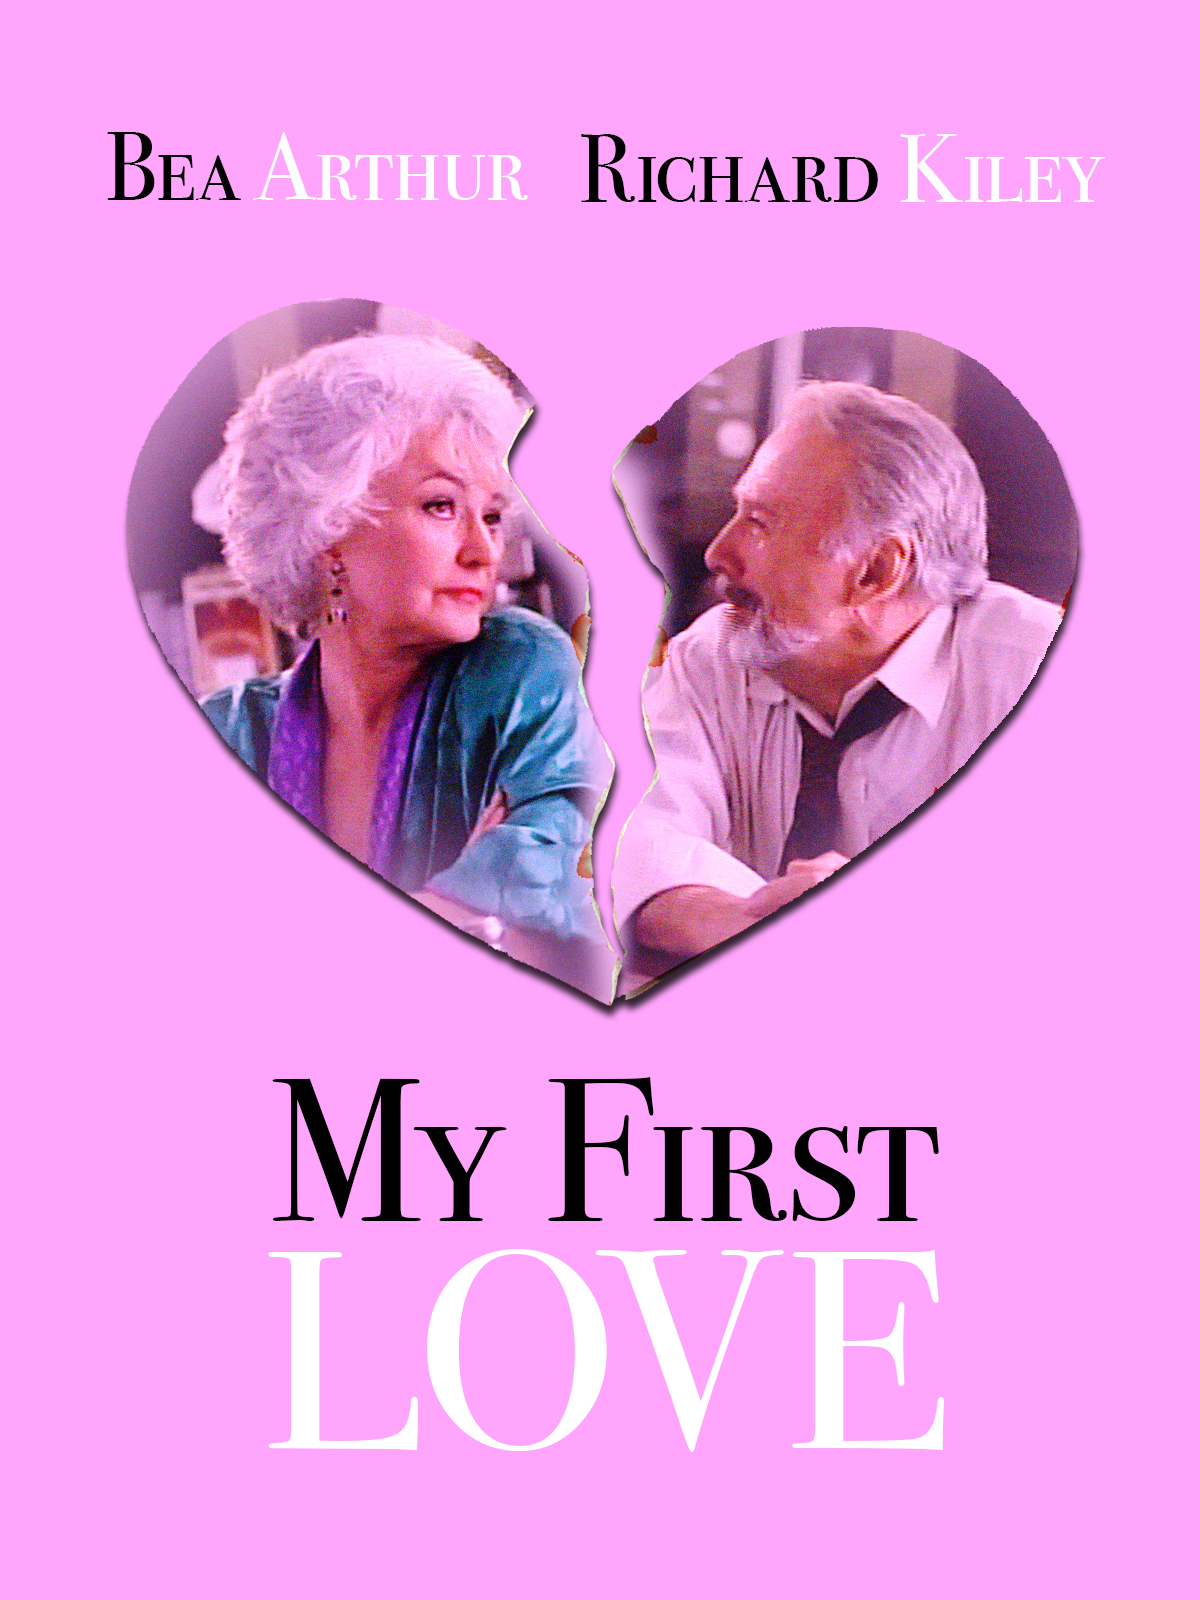 My First Love (1988) Screenshot 1 